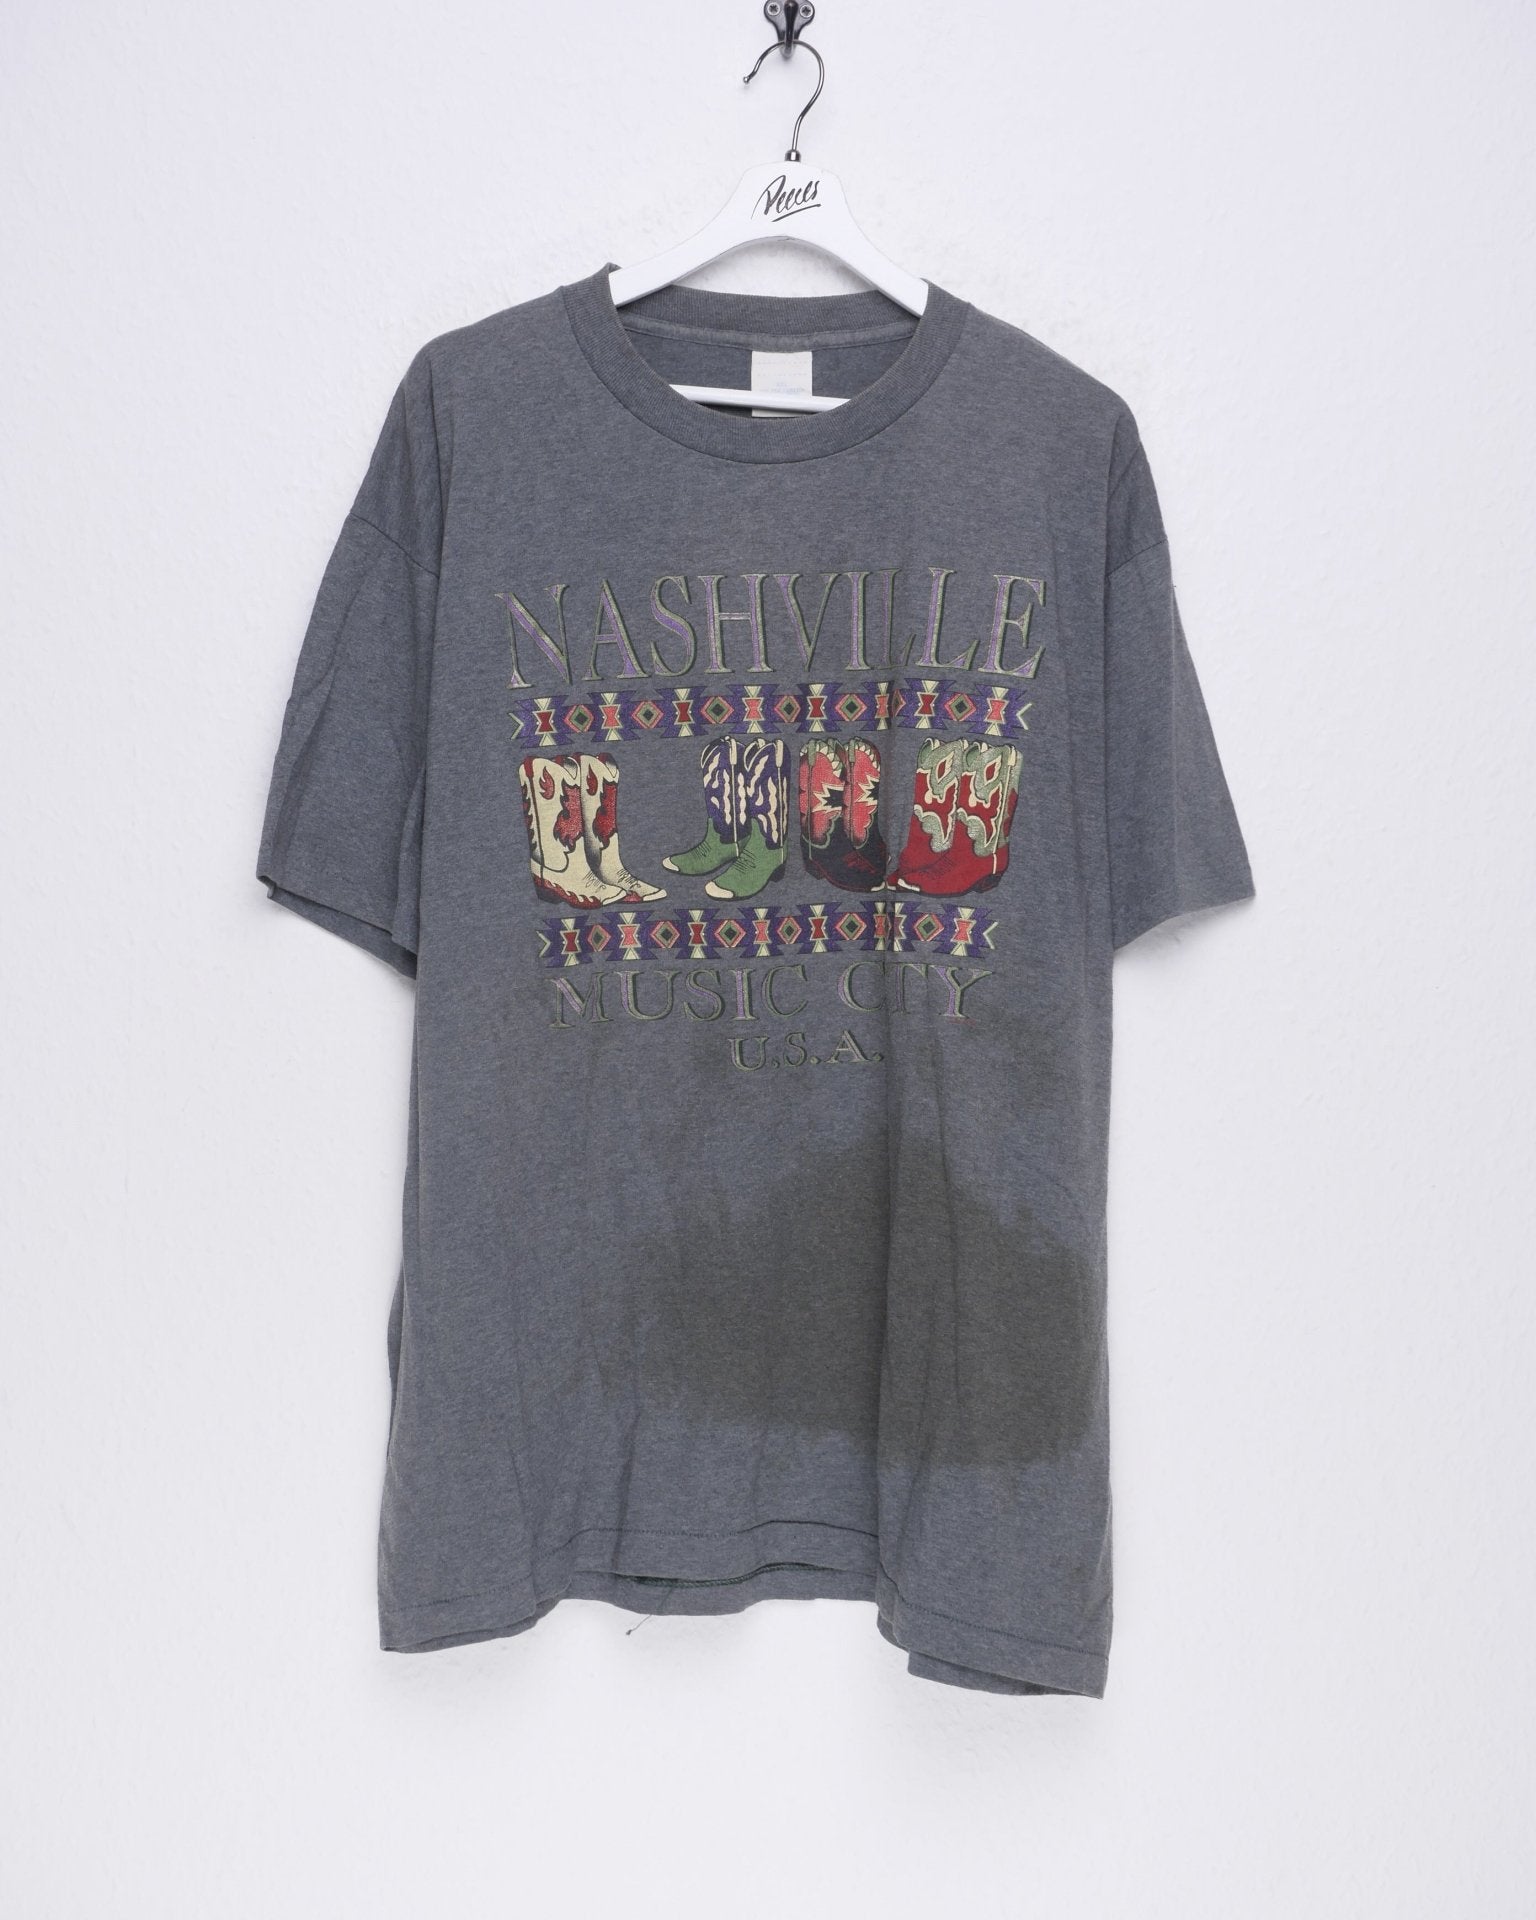 Nashville printed Graphic Vintage Shirt - Peeces